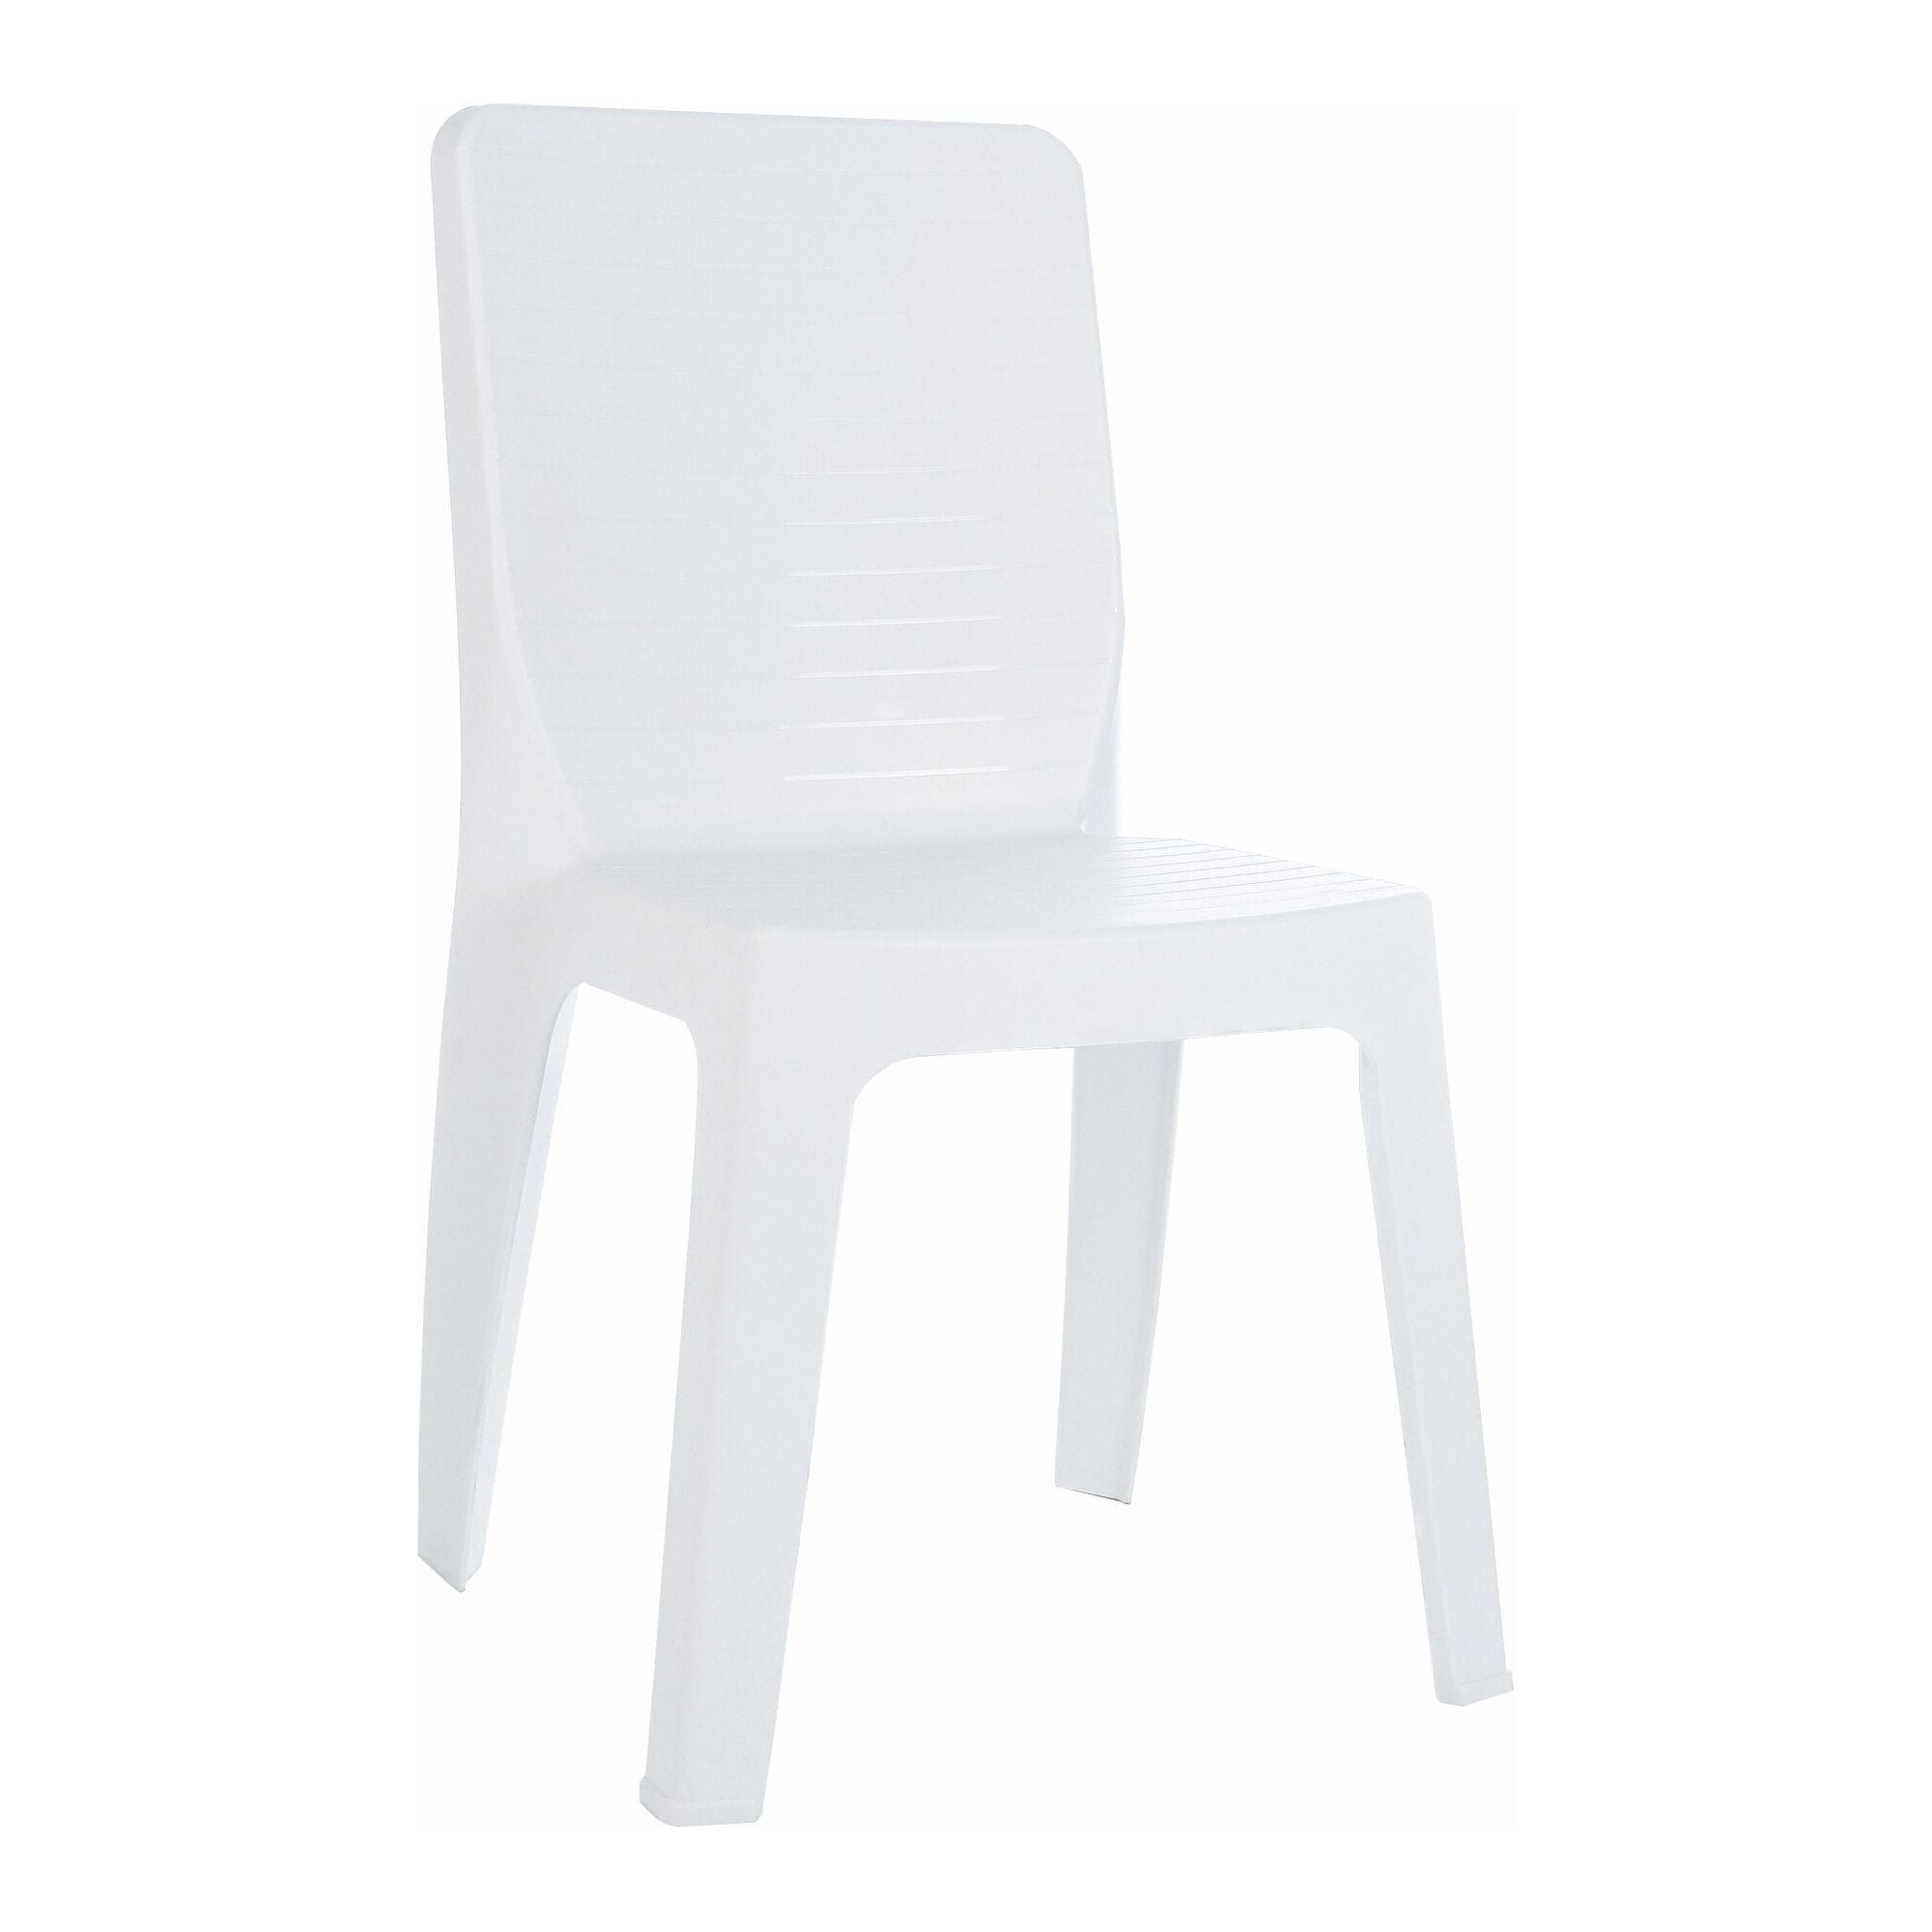 Garbar iris chair outdoor white